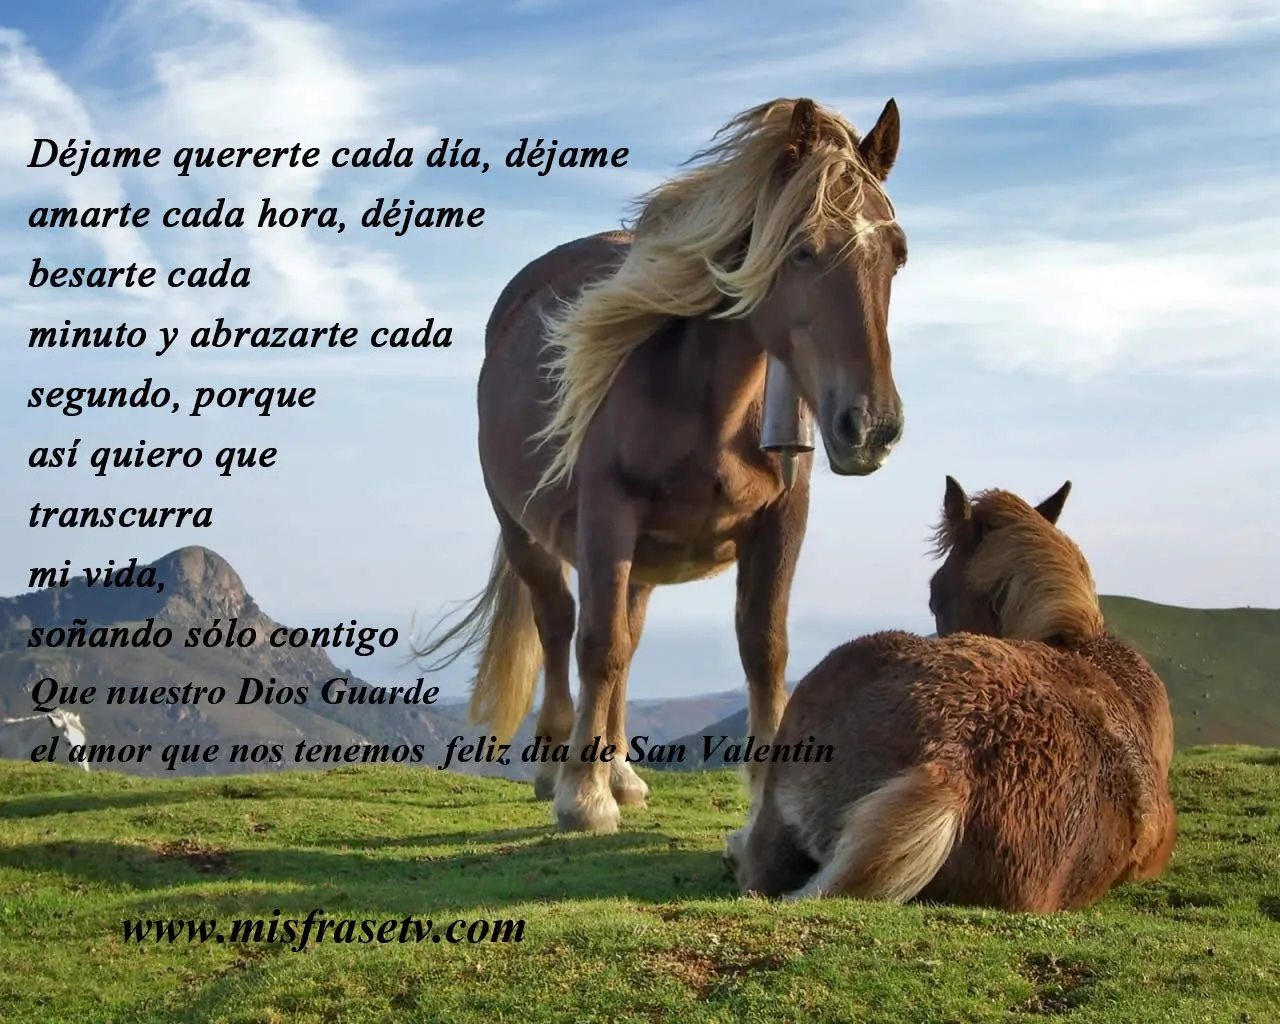 Imagenes de caballos con frases lindas - Imagui